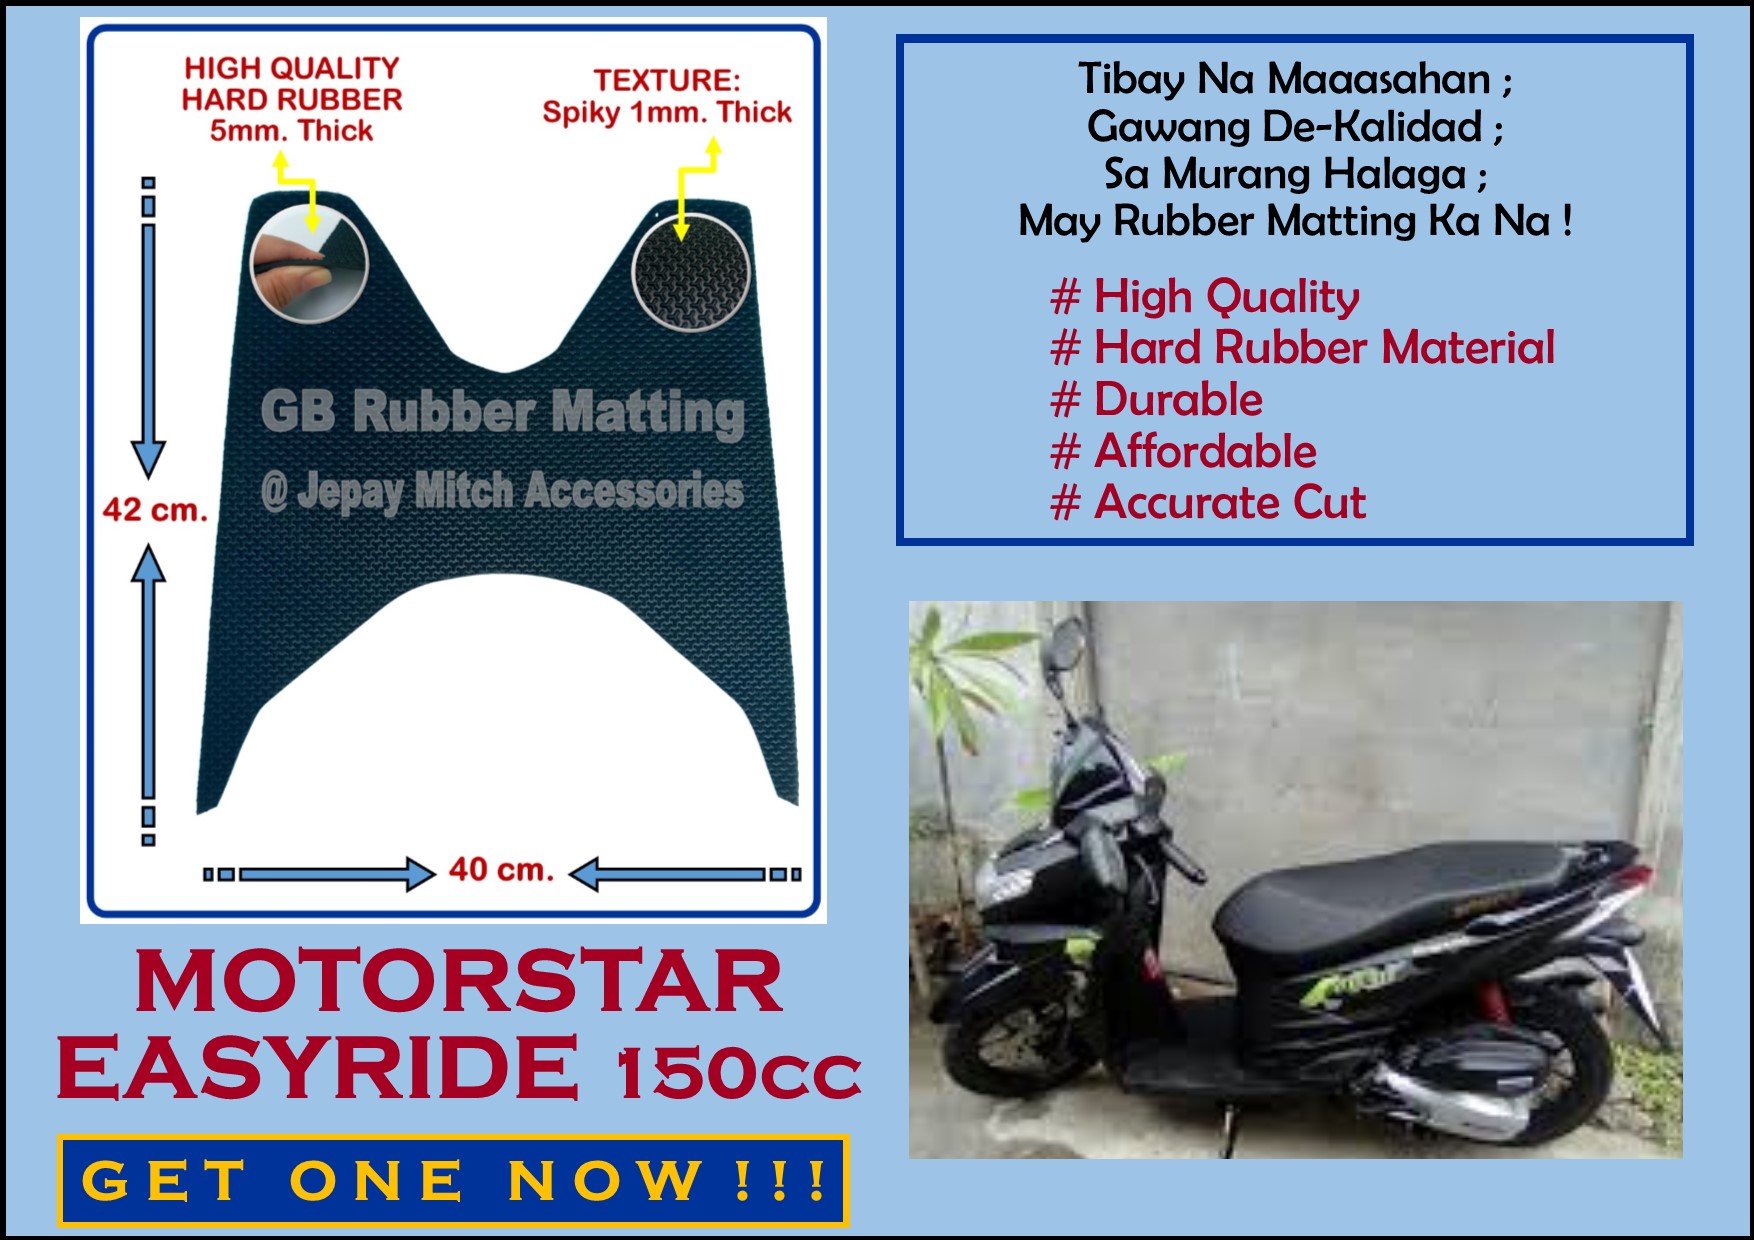 The Original Gb Rubber Matting Motorstar Easy Ride 150cc Lazada Ph